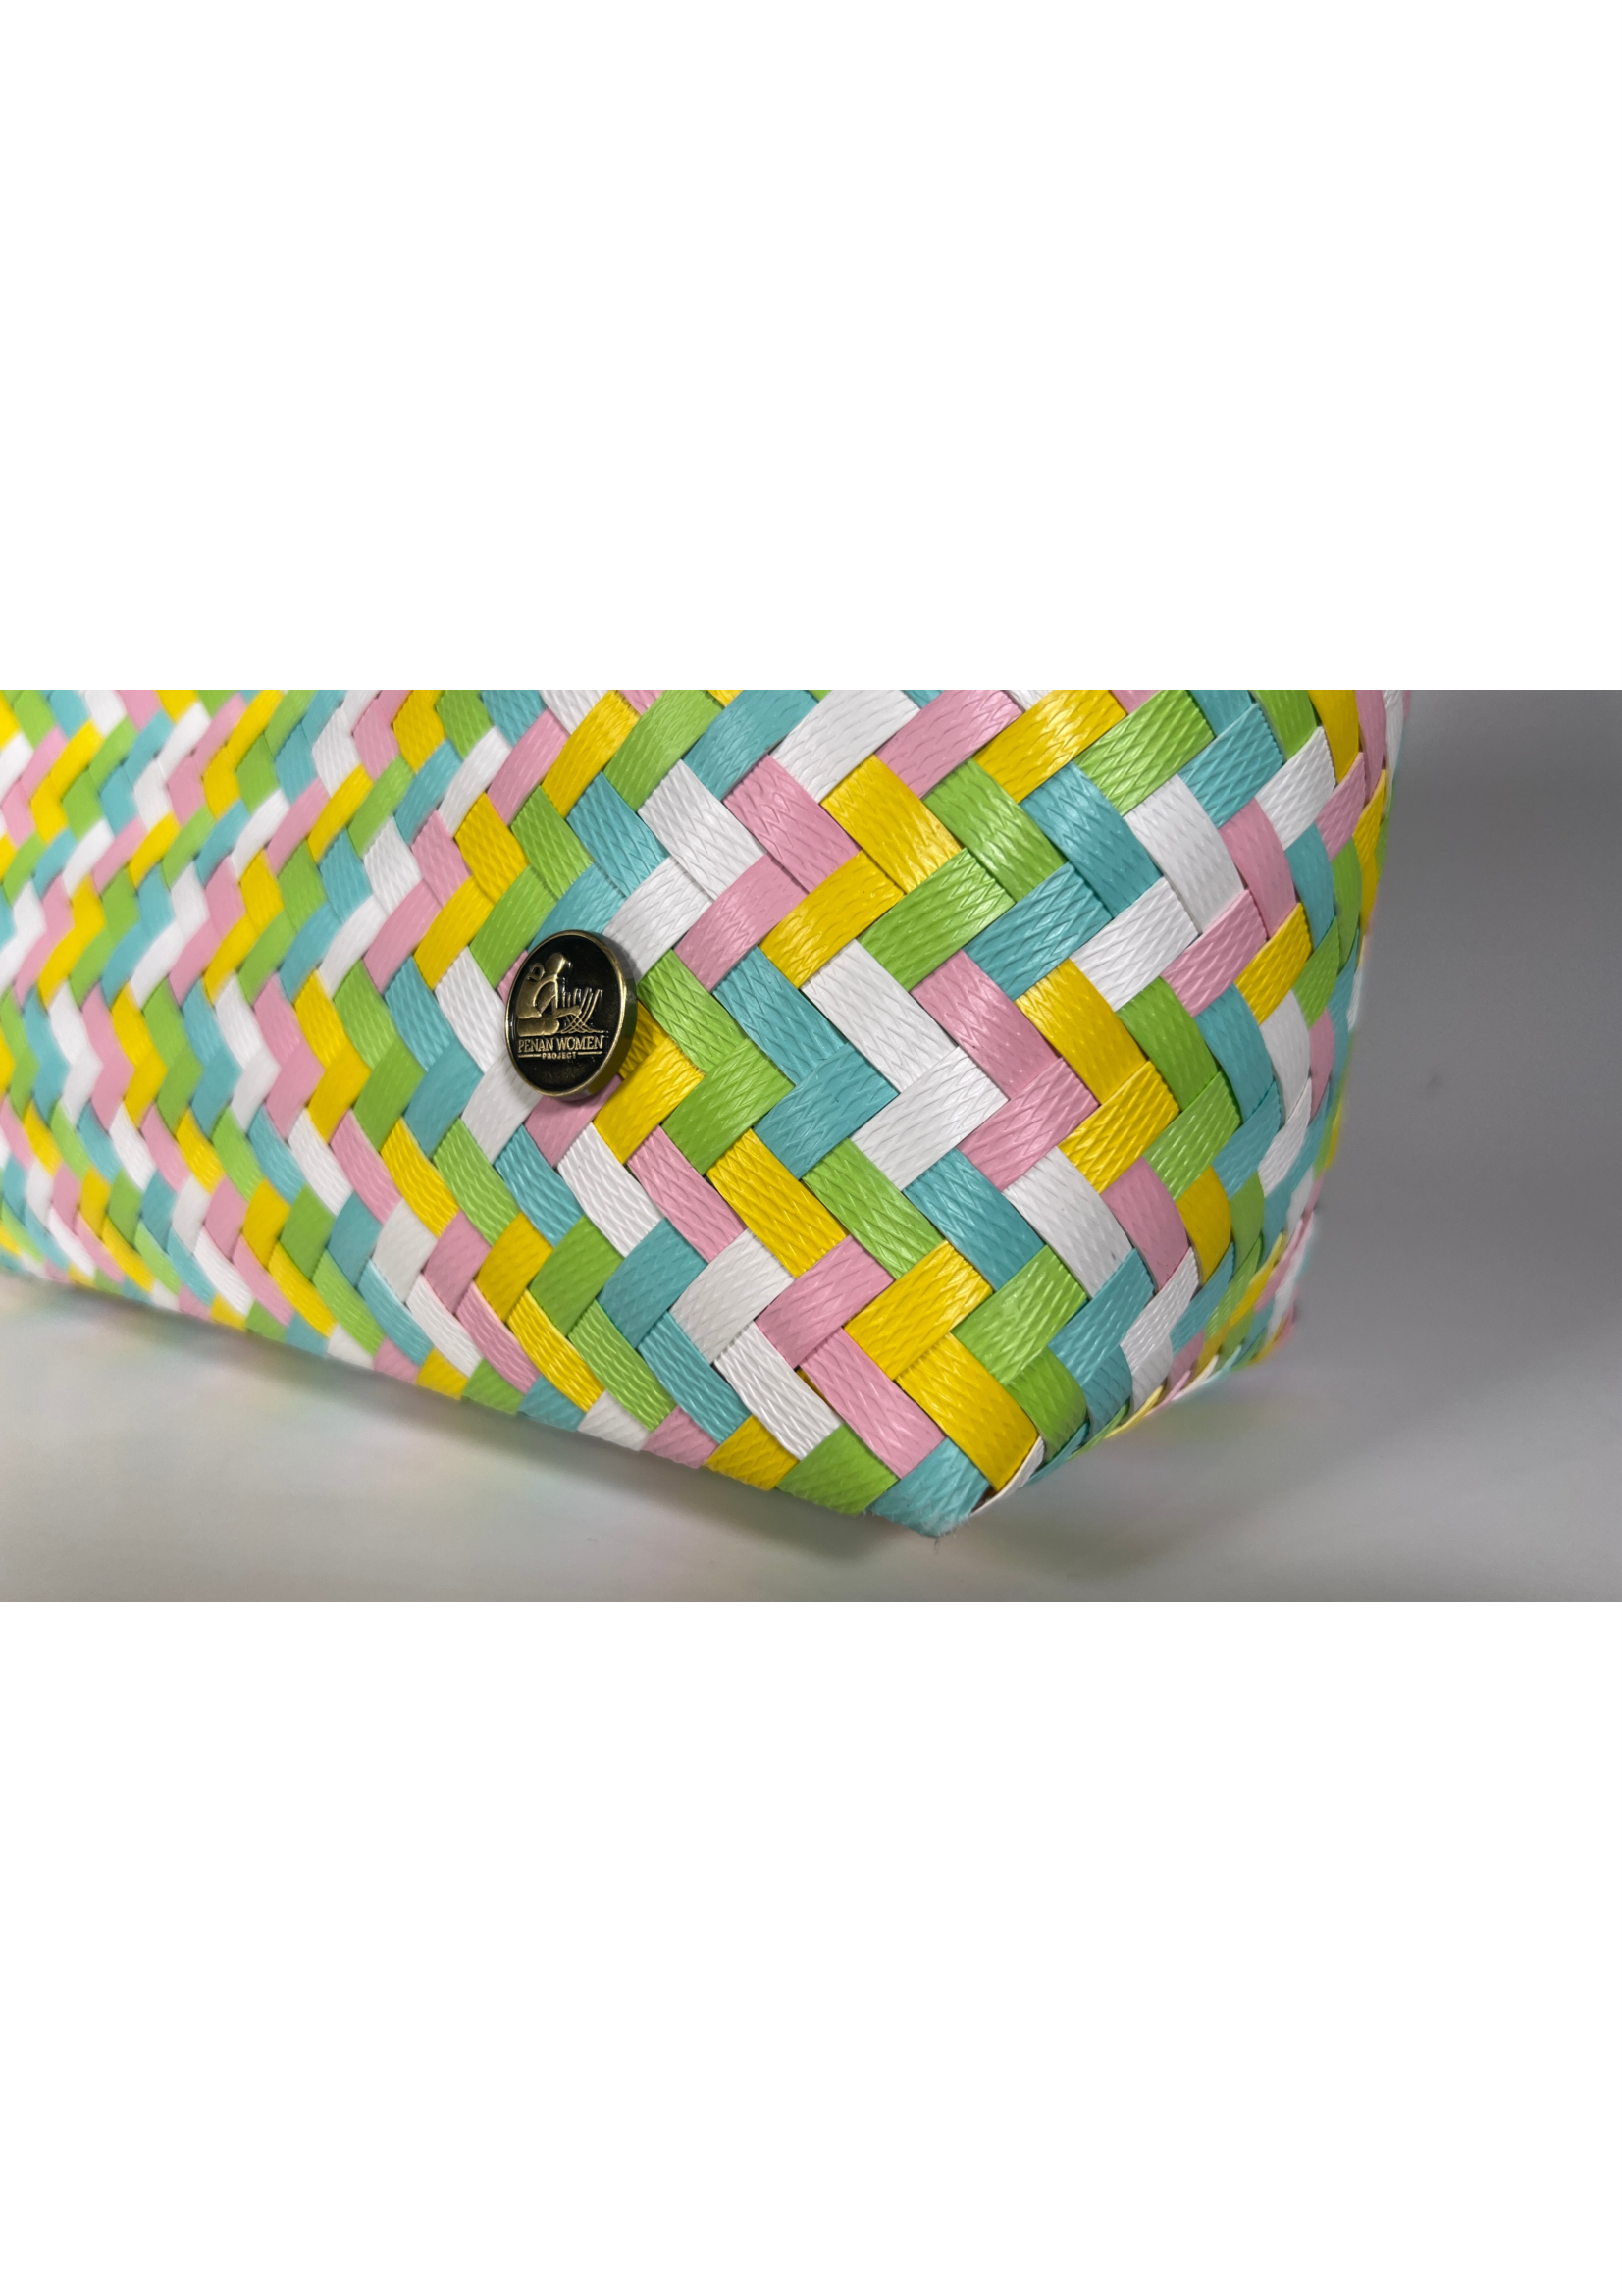 Pixel Pastel Patterned Bag